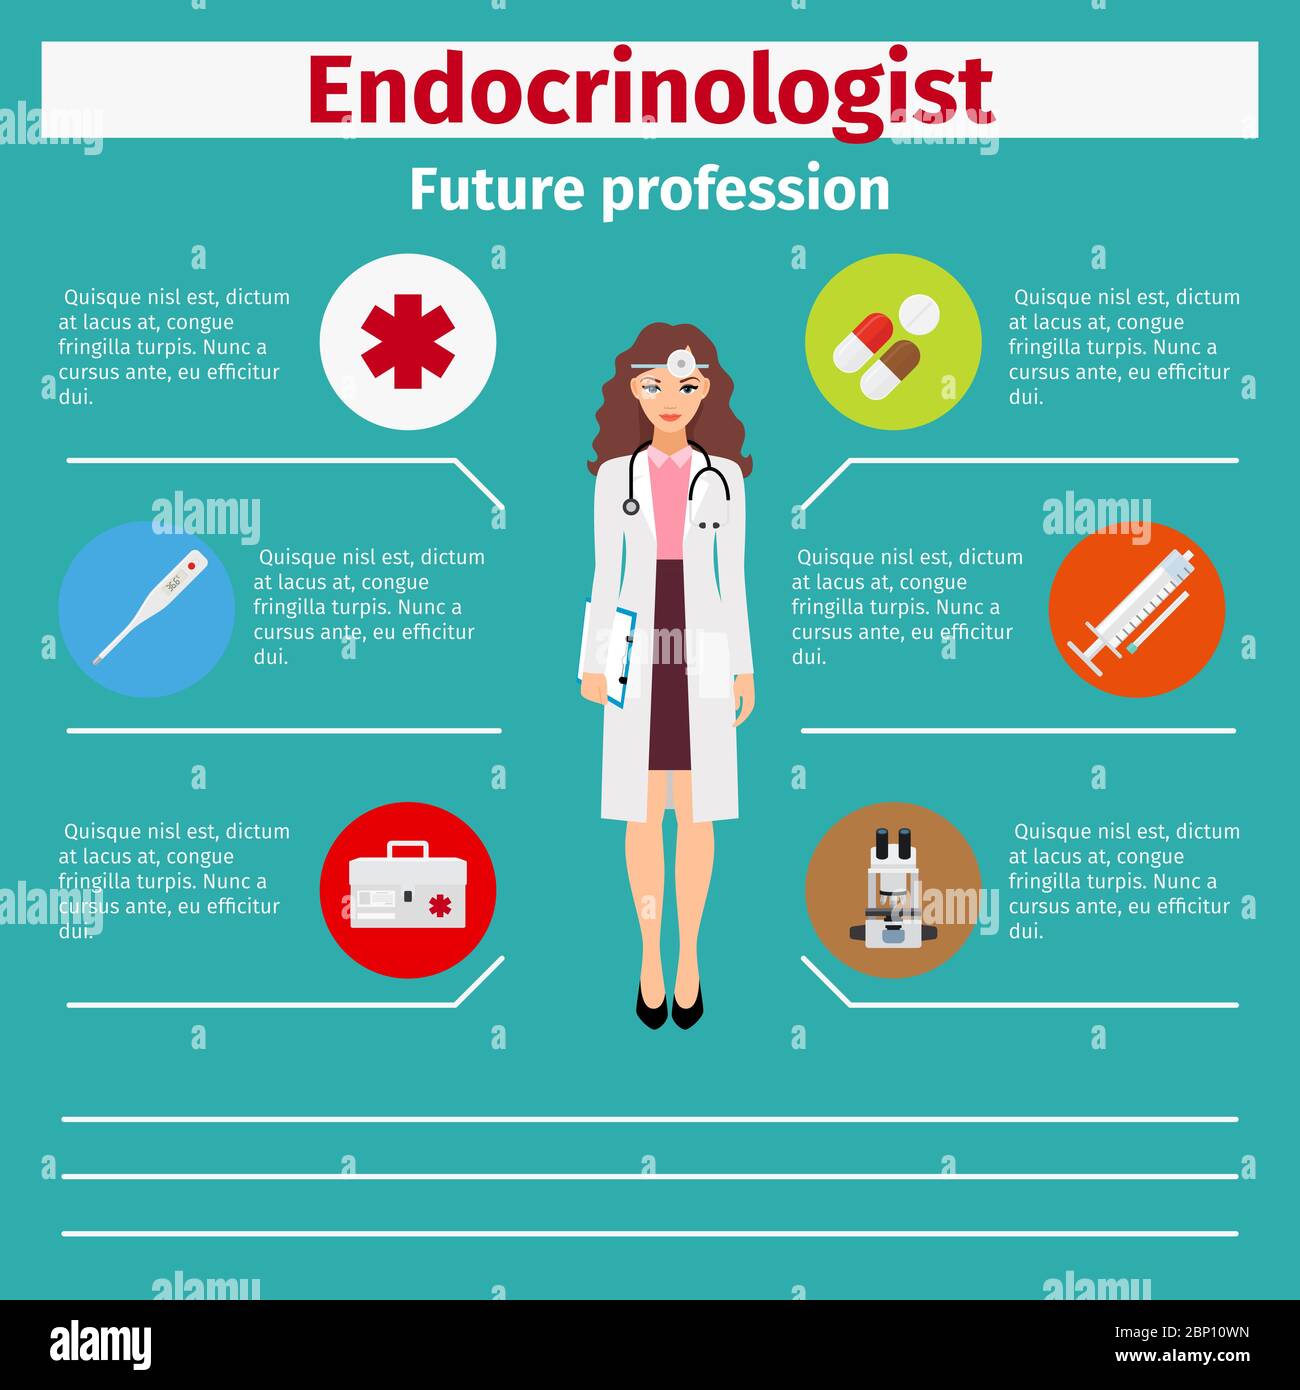 Best Endocrinologist In Texas